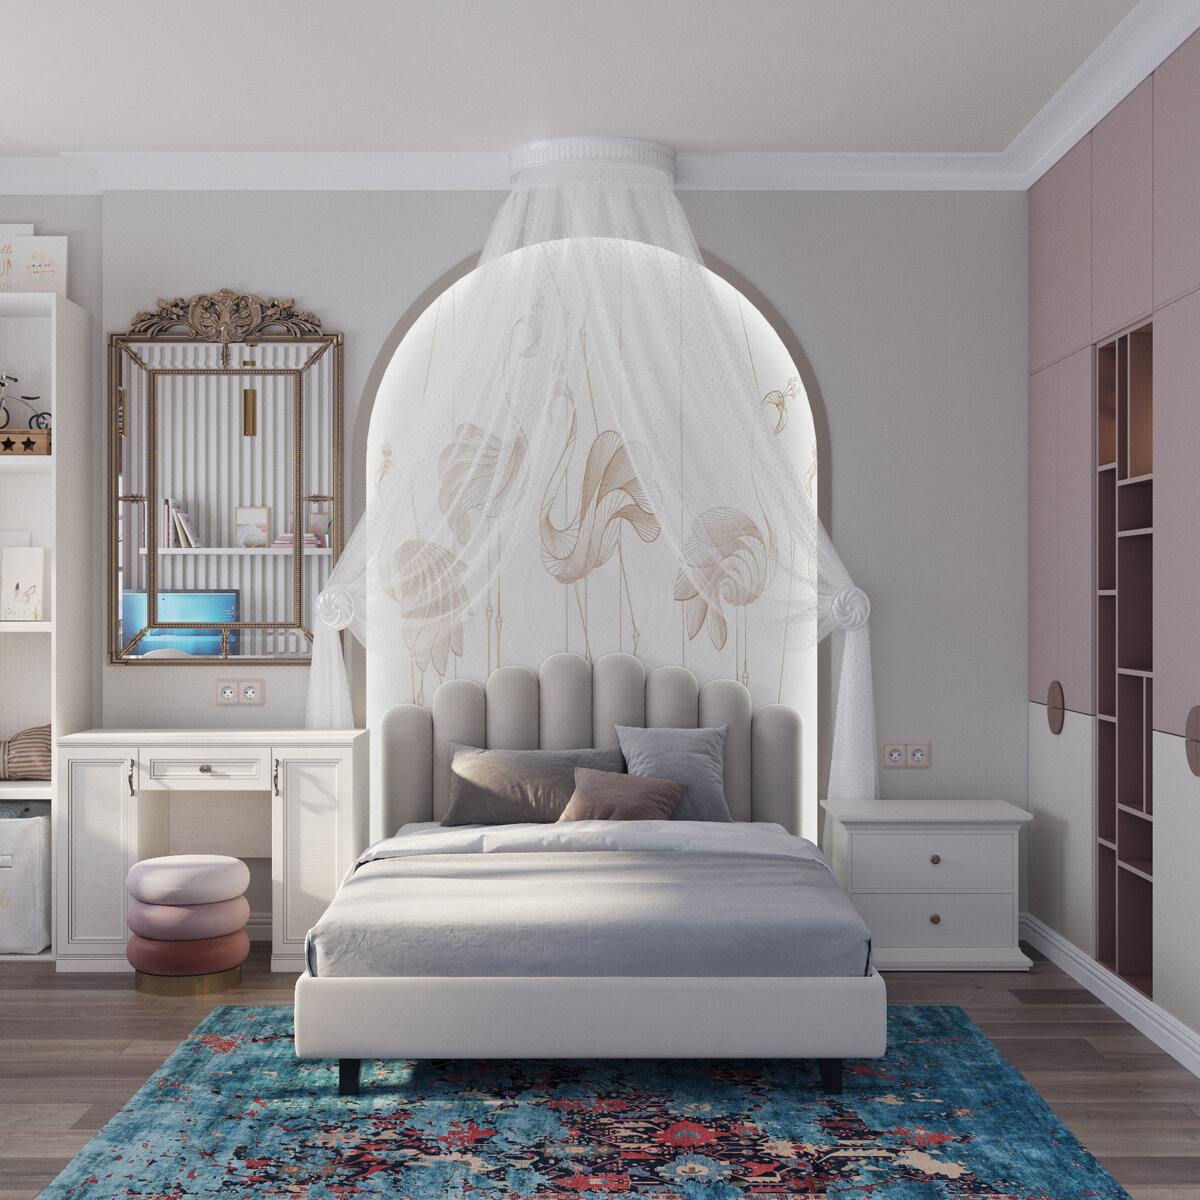 Кроватка с балдахином и декор